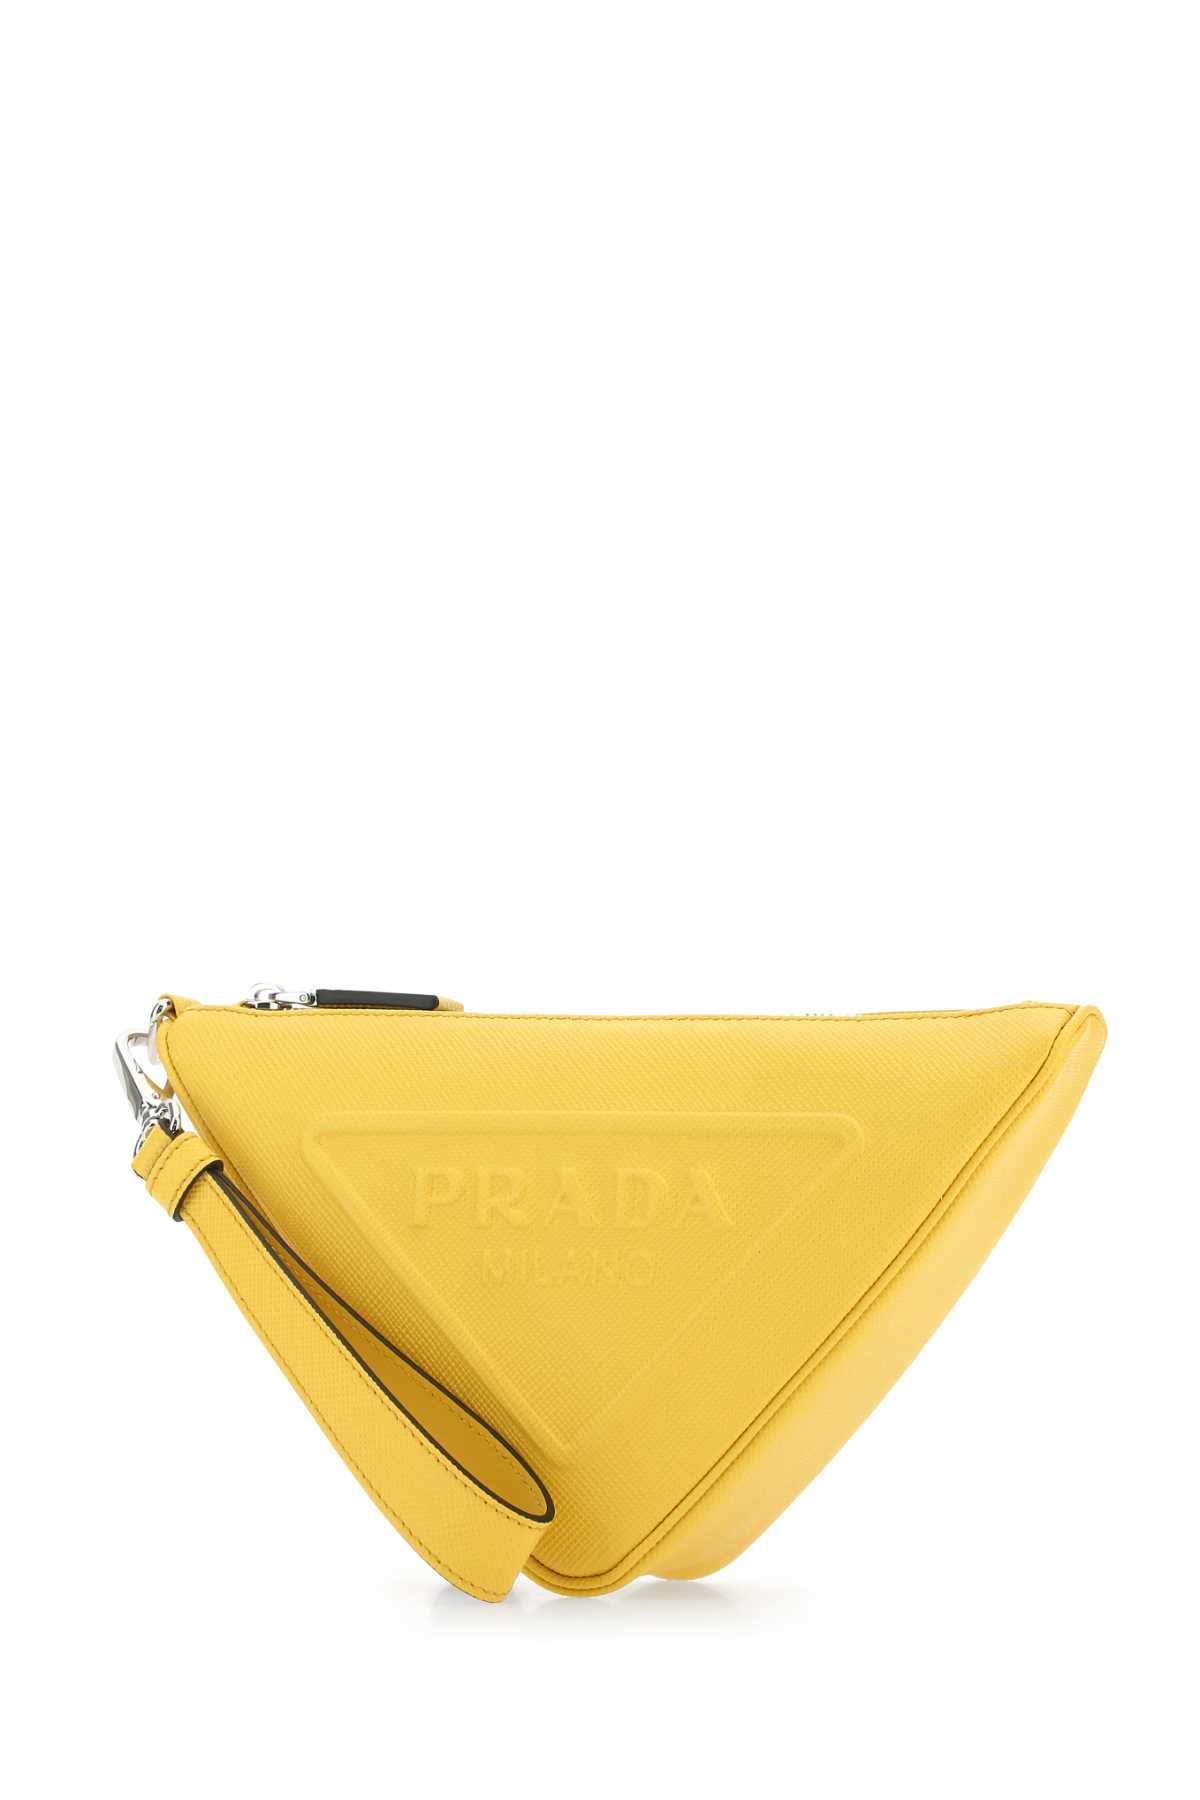 Prada Yellow Leather Triangle Clutch In F0377